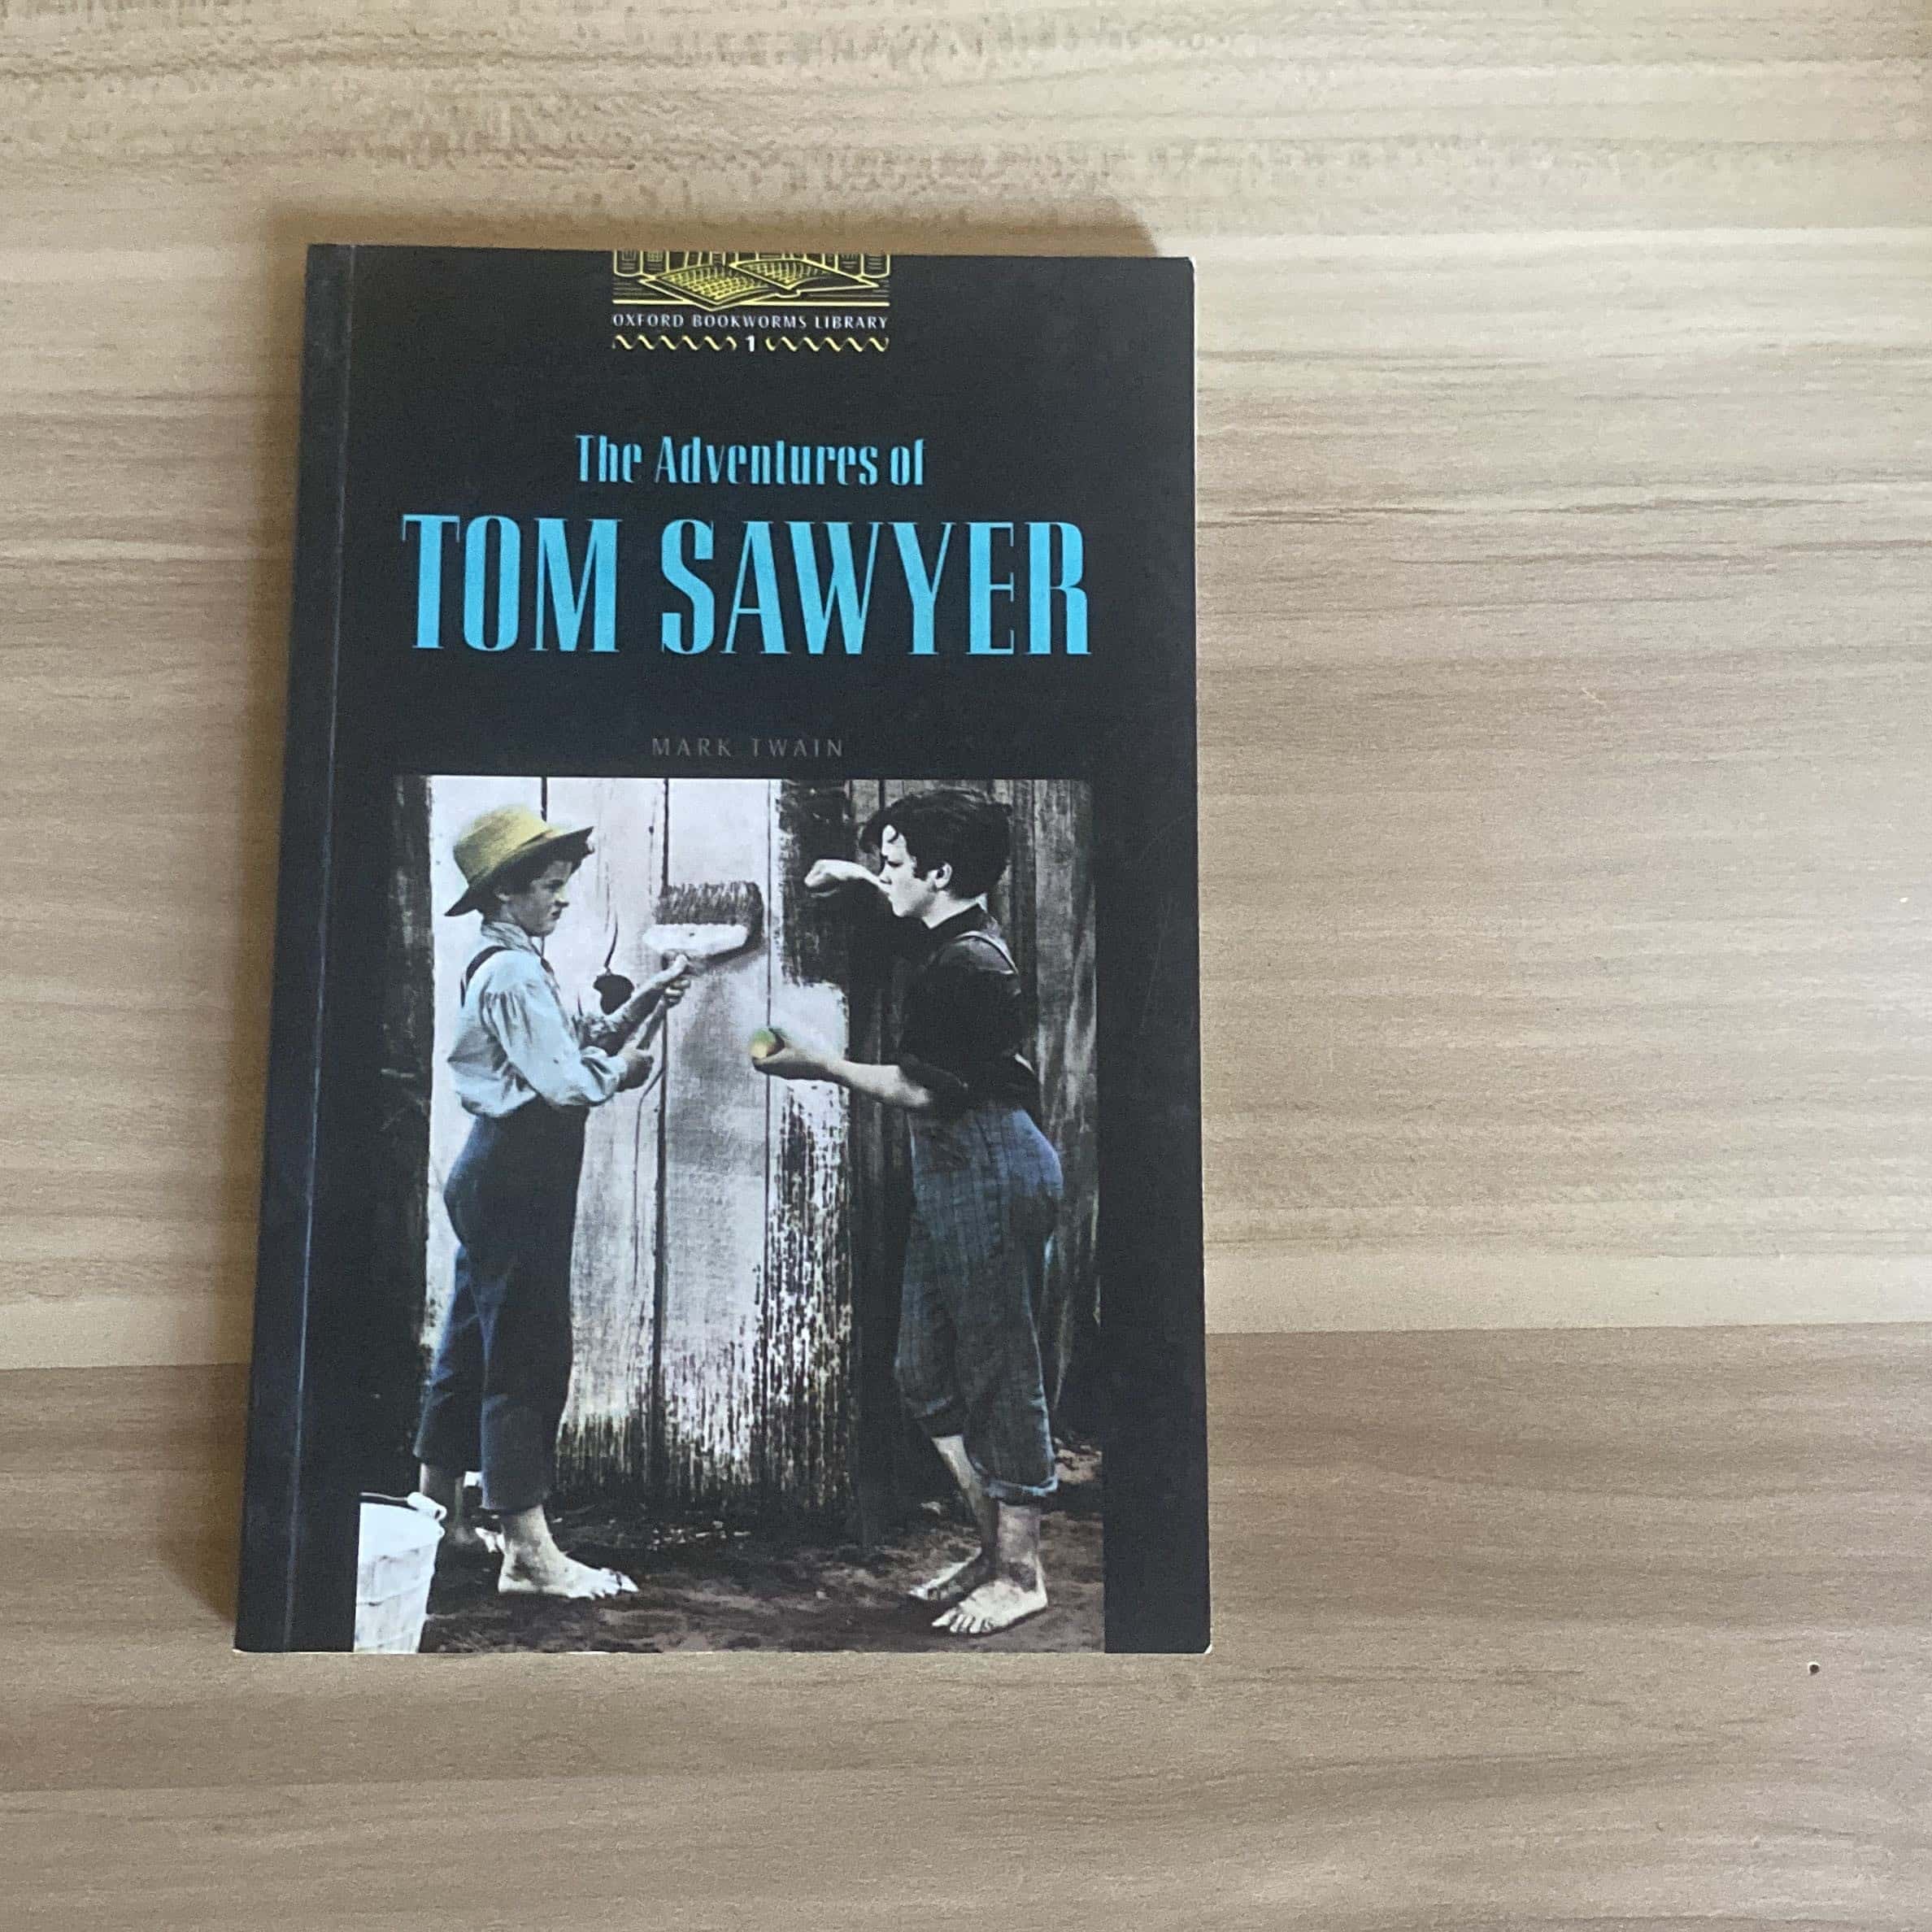 ¡Explora las Aventuras Inolvidables de Tom Sawyer en esta Clásica Novela!